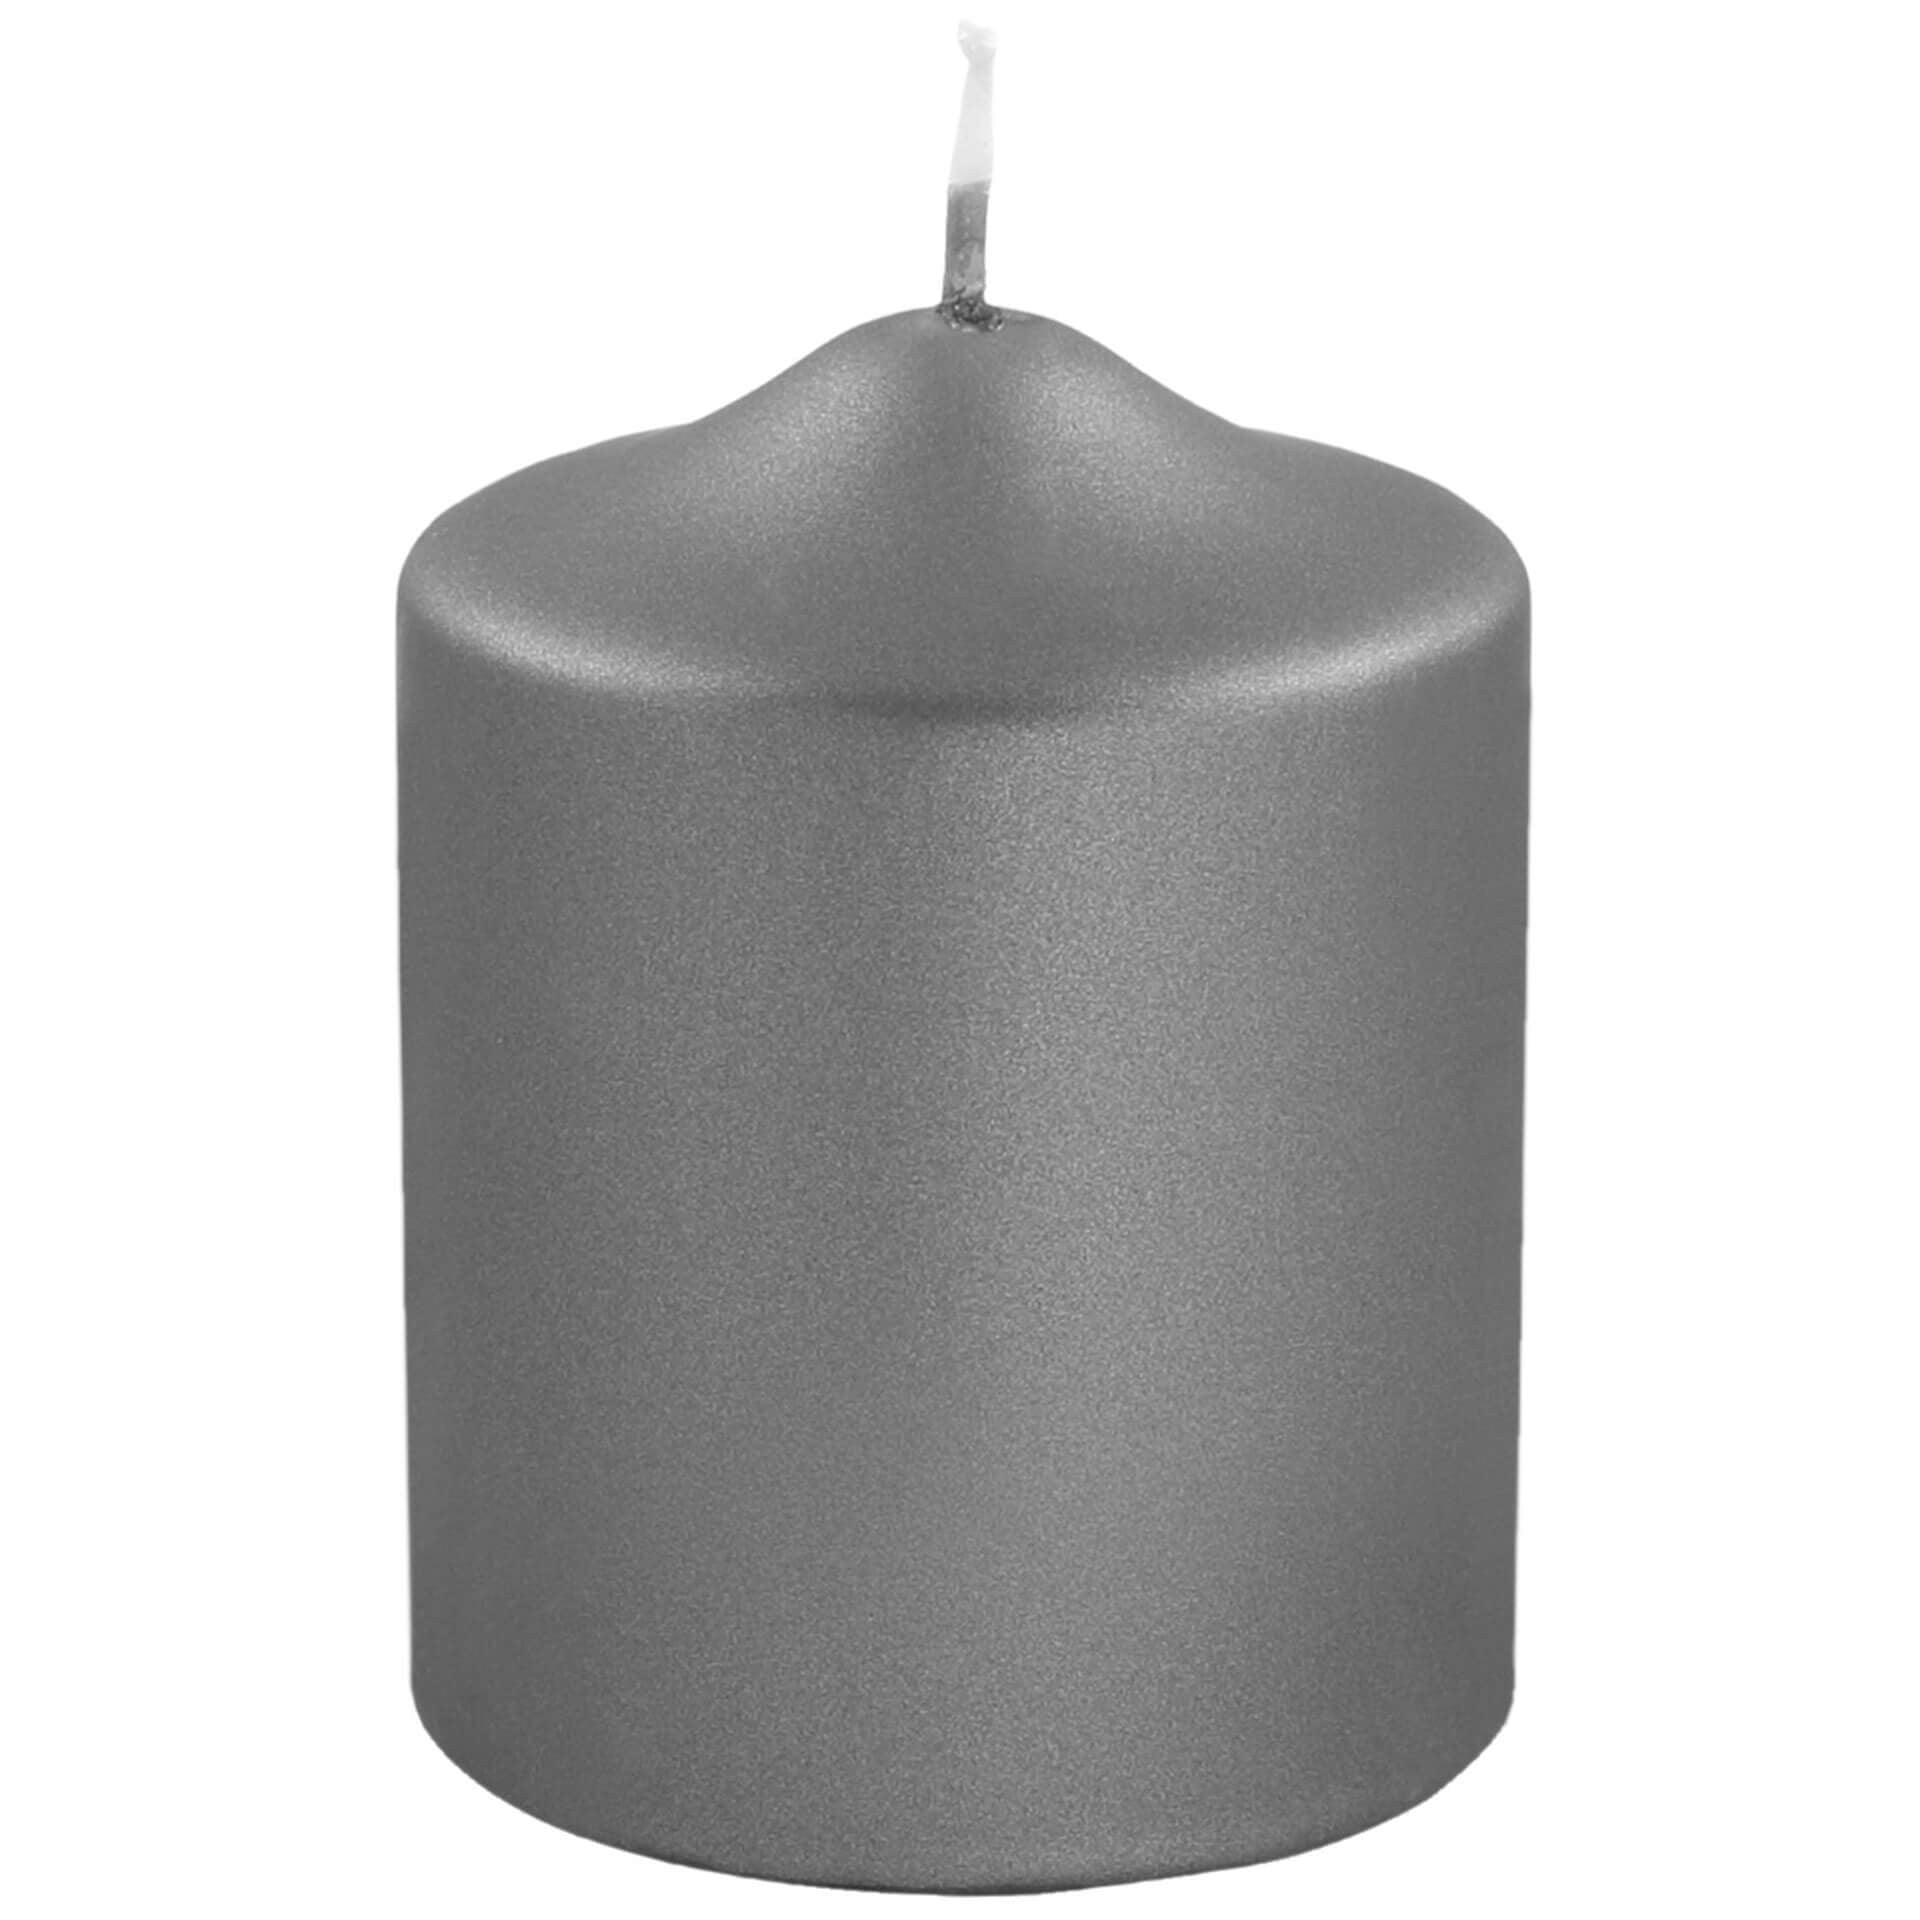 Fink Candle Altarkerze getaucht Stumpenkerze metallic Grau 10cm - HomeDesign Knaus wir schaffen Inspirationen 